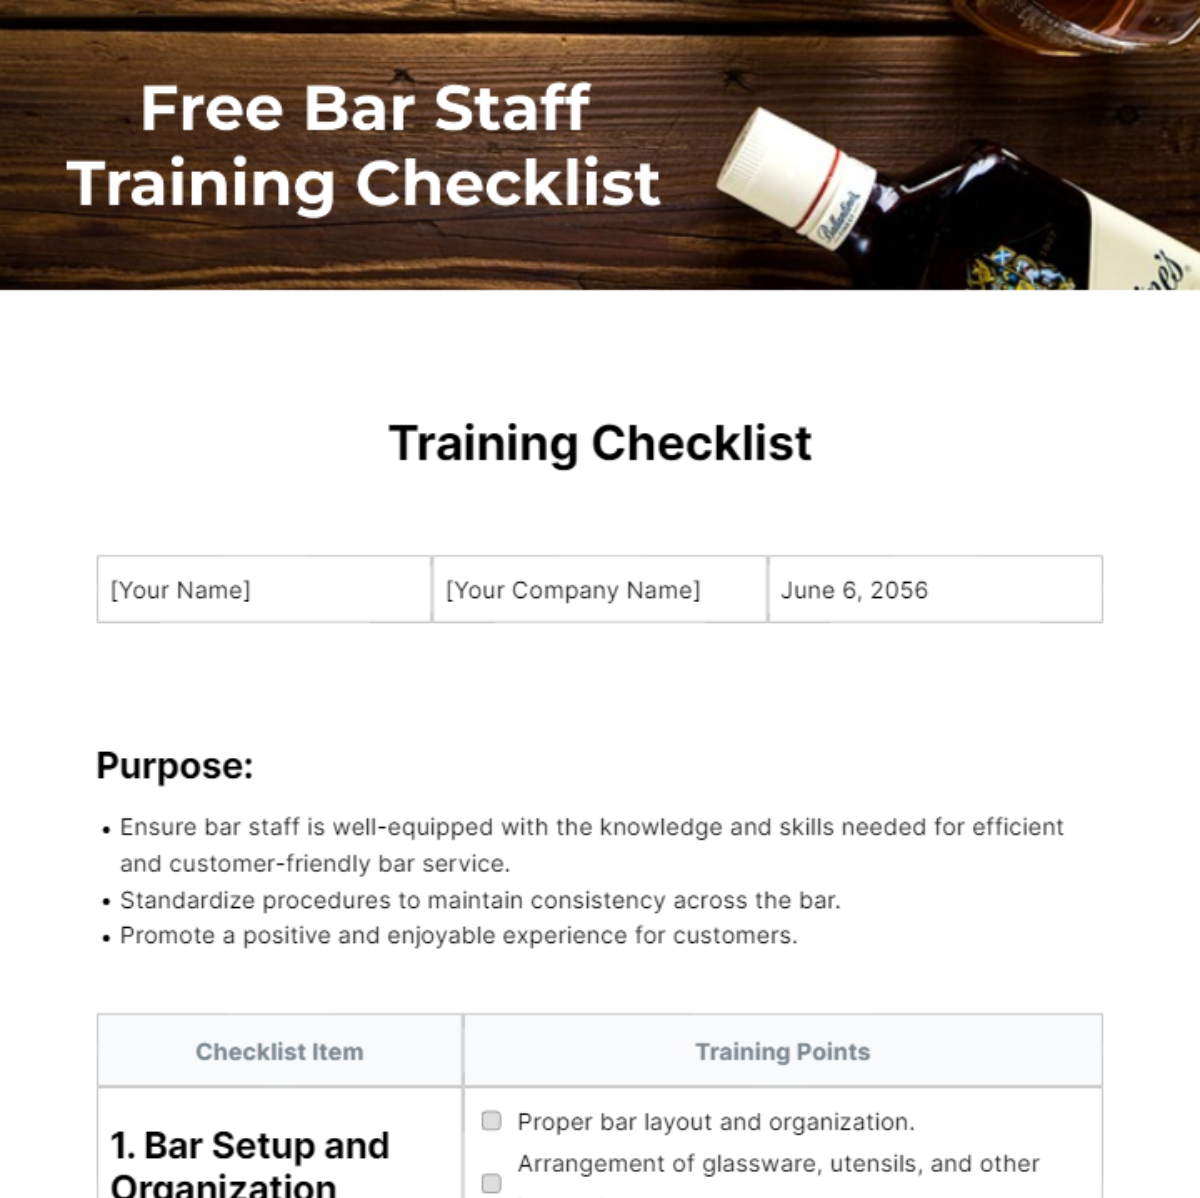 Free Bar Staff Training Checklist Template